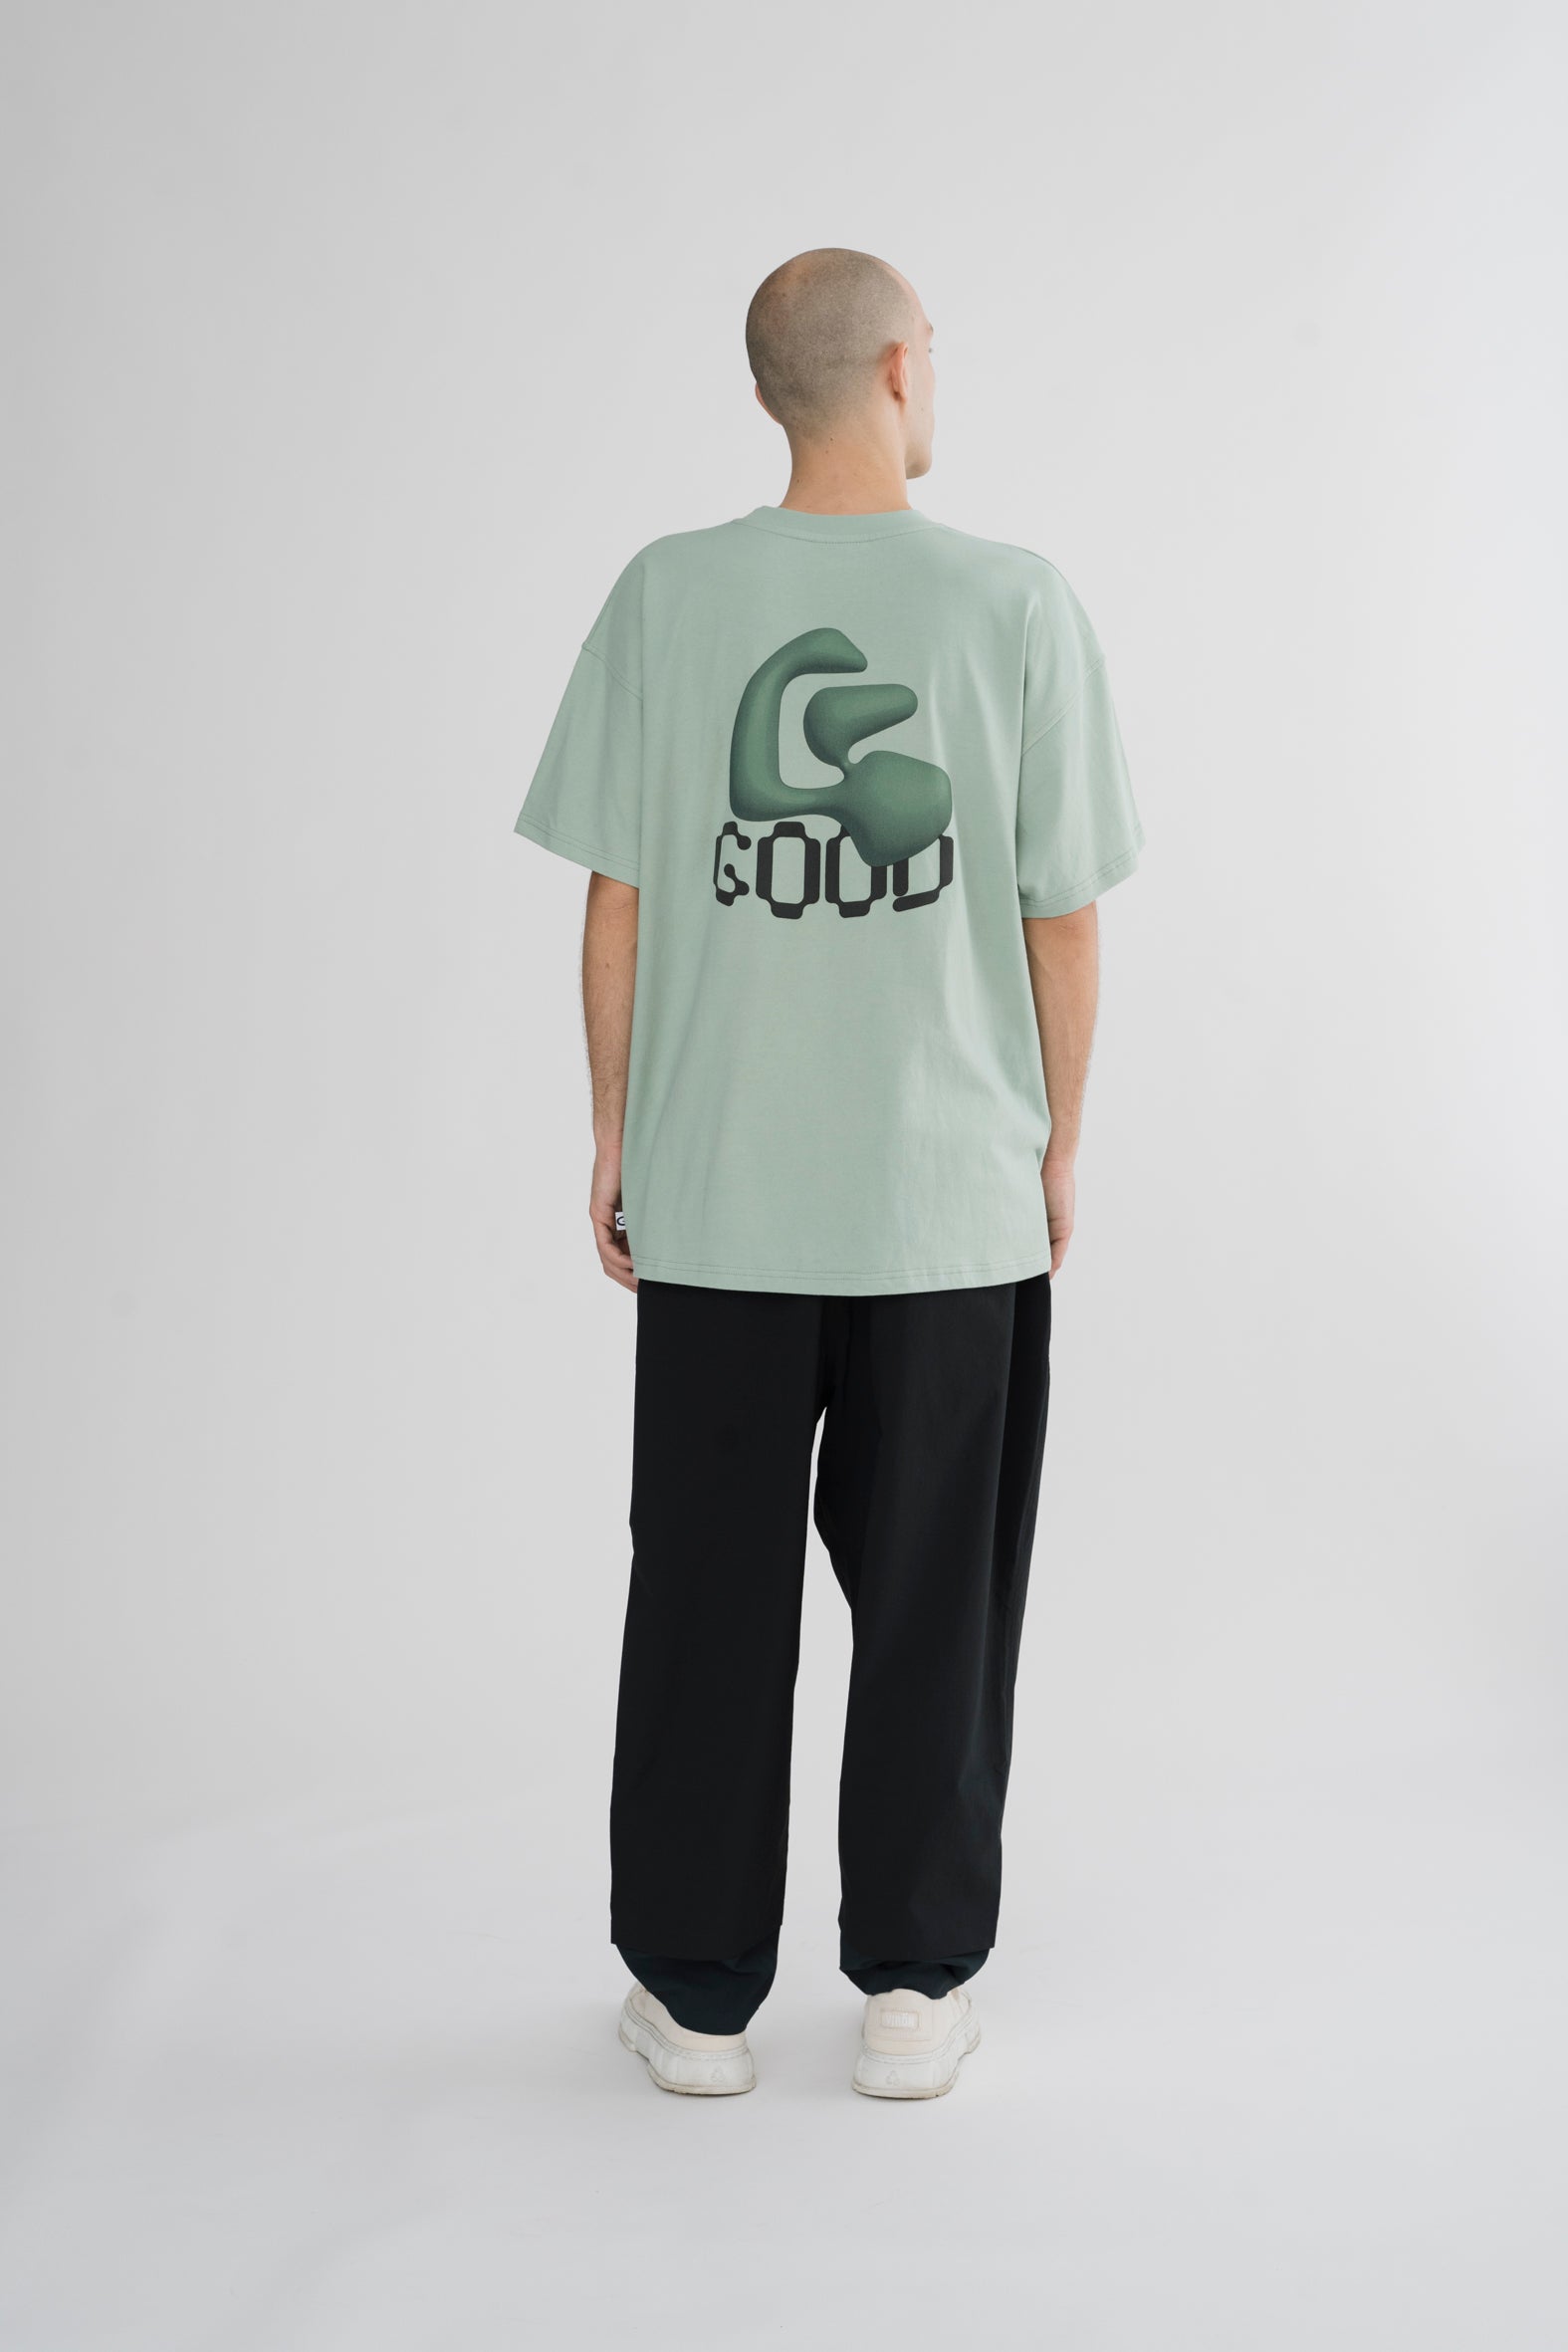 Goodbois Satellite T-Shirt Jade